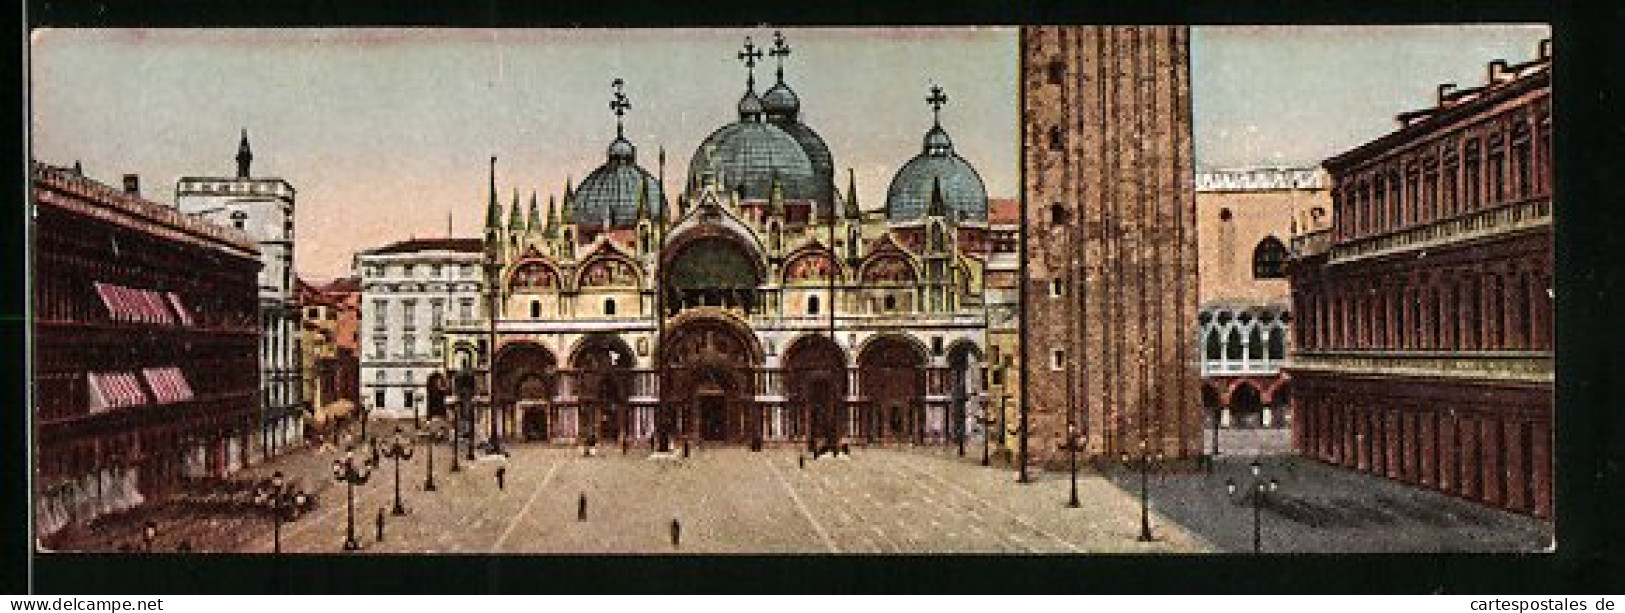 Mini-Cartolina Venezia, Basilica S. Marco  - Venezia (Venice)